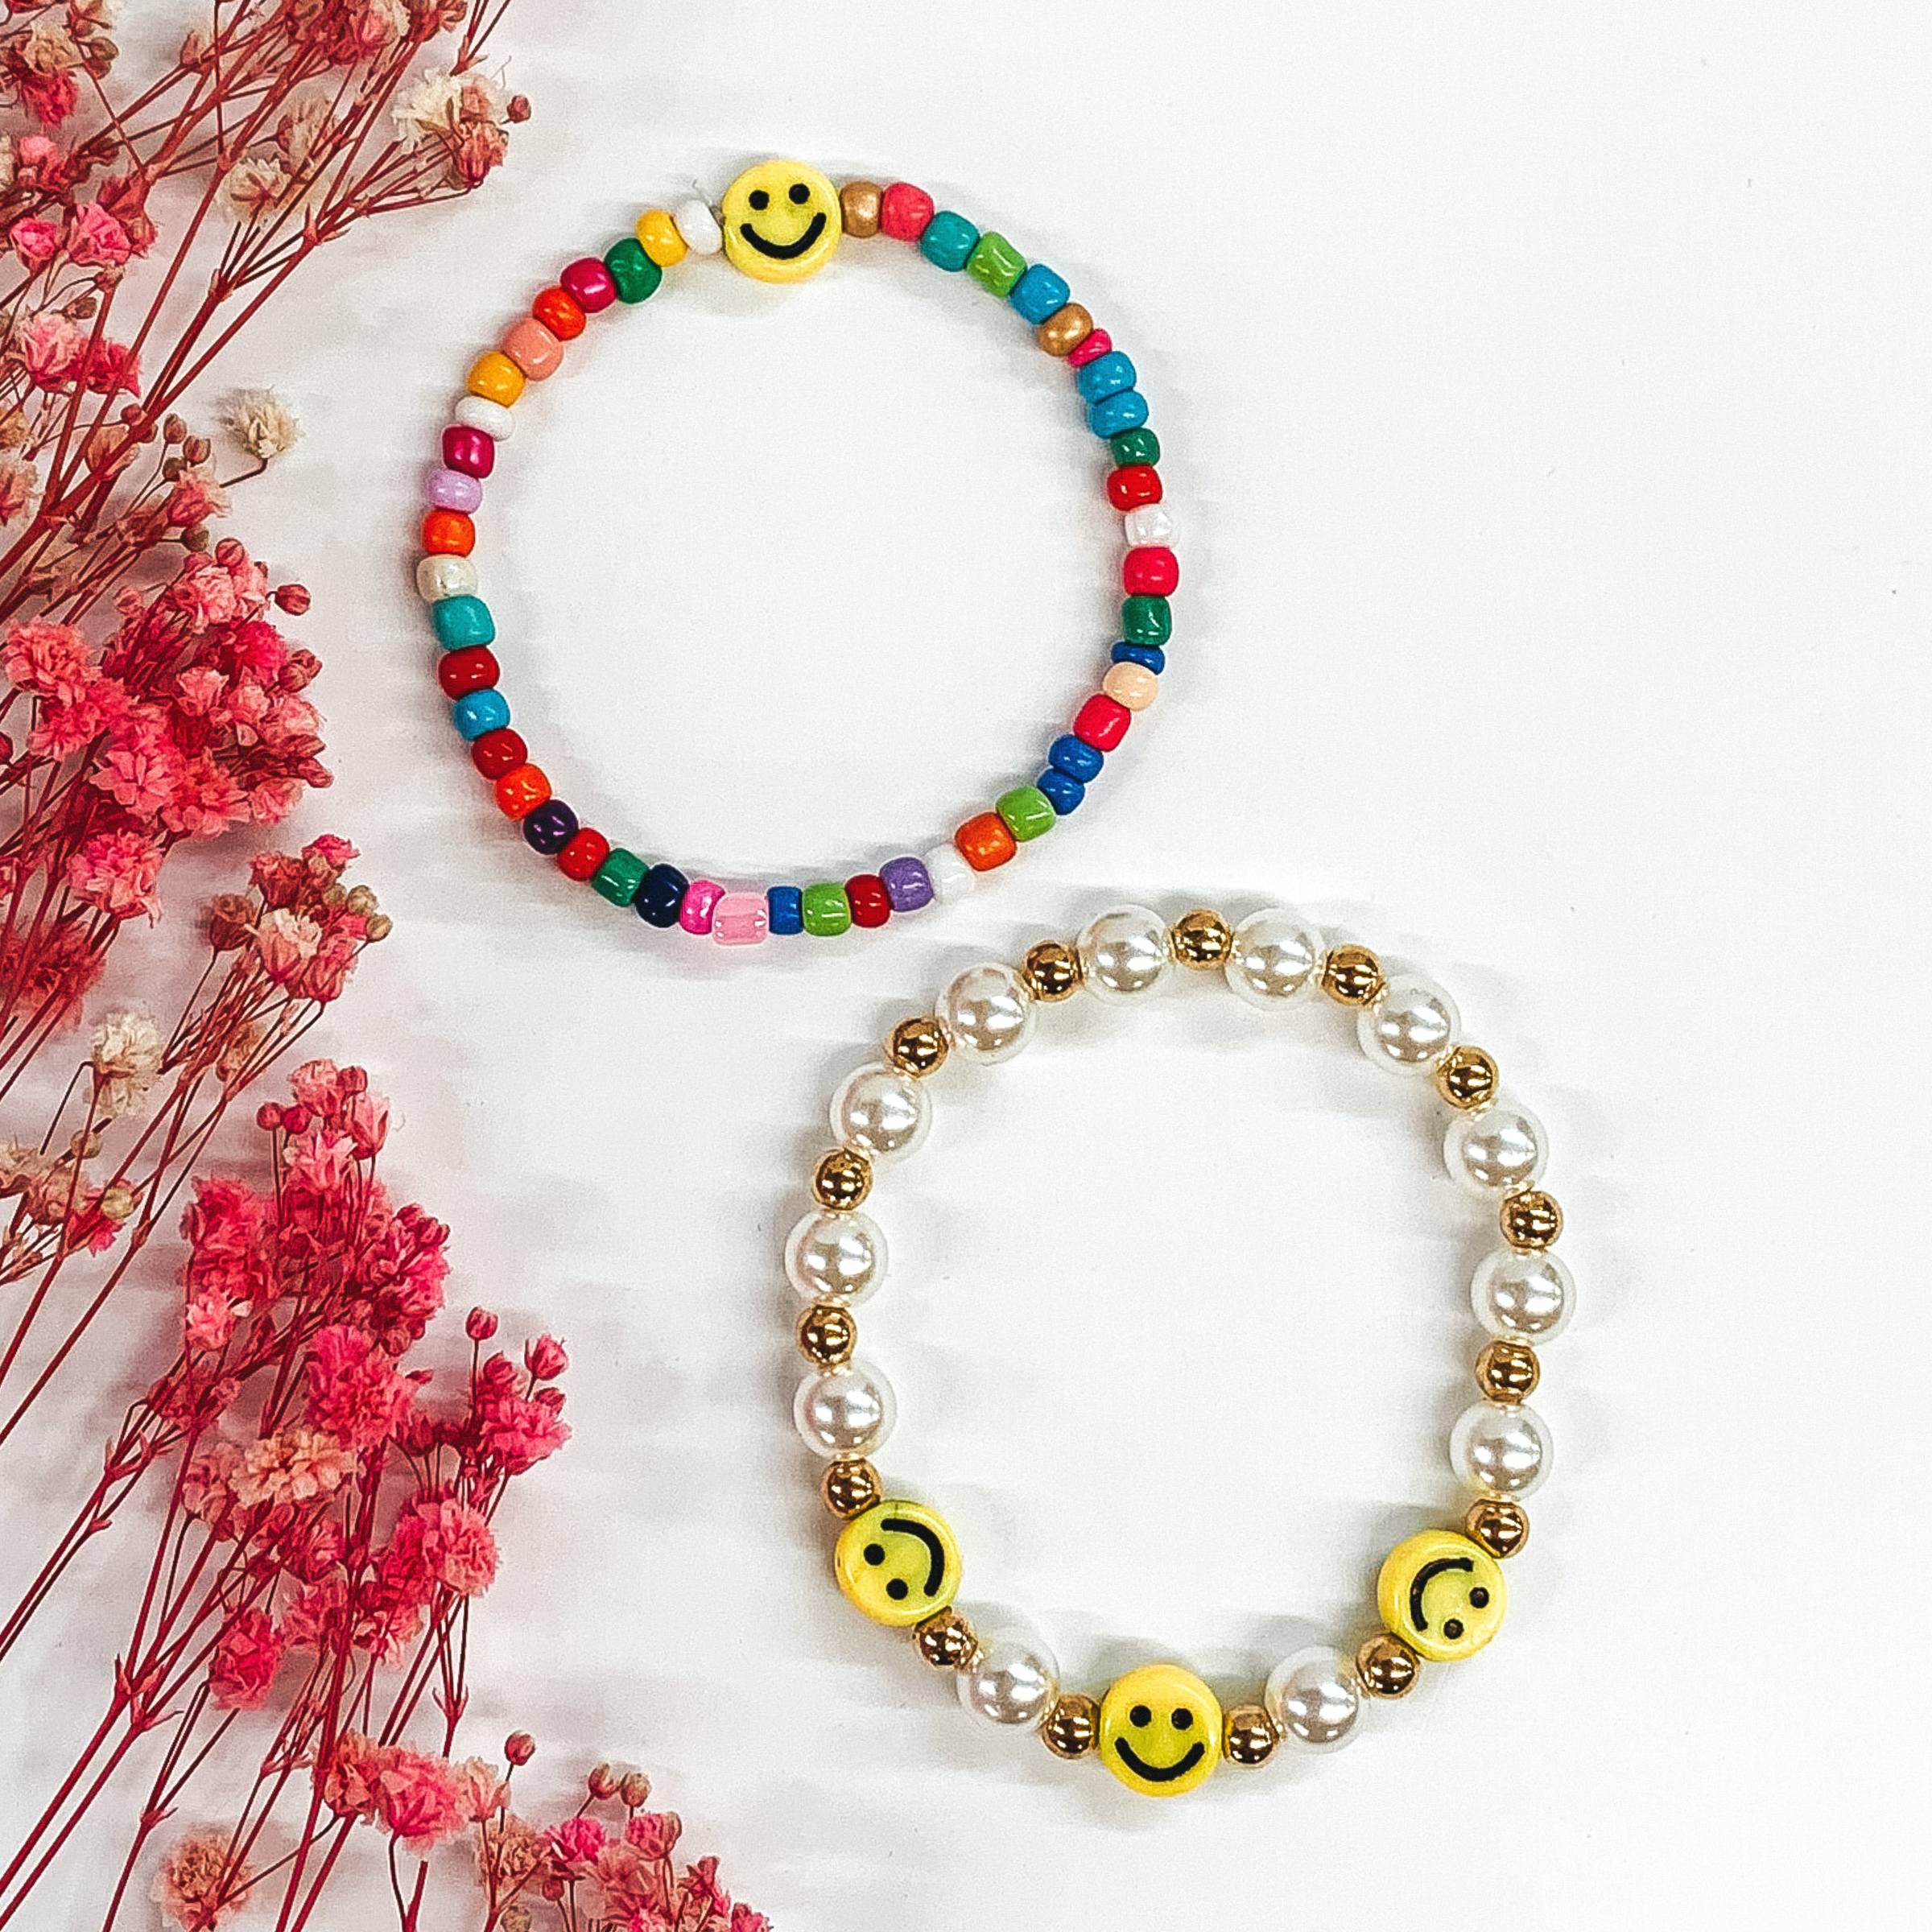 Make me Smile Beaded Bracelet Set in Multicolored - Giddy Up Glamour Boutique